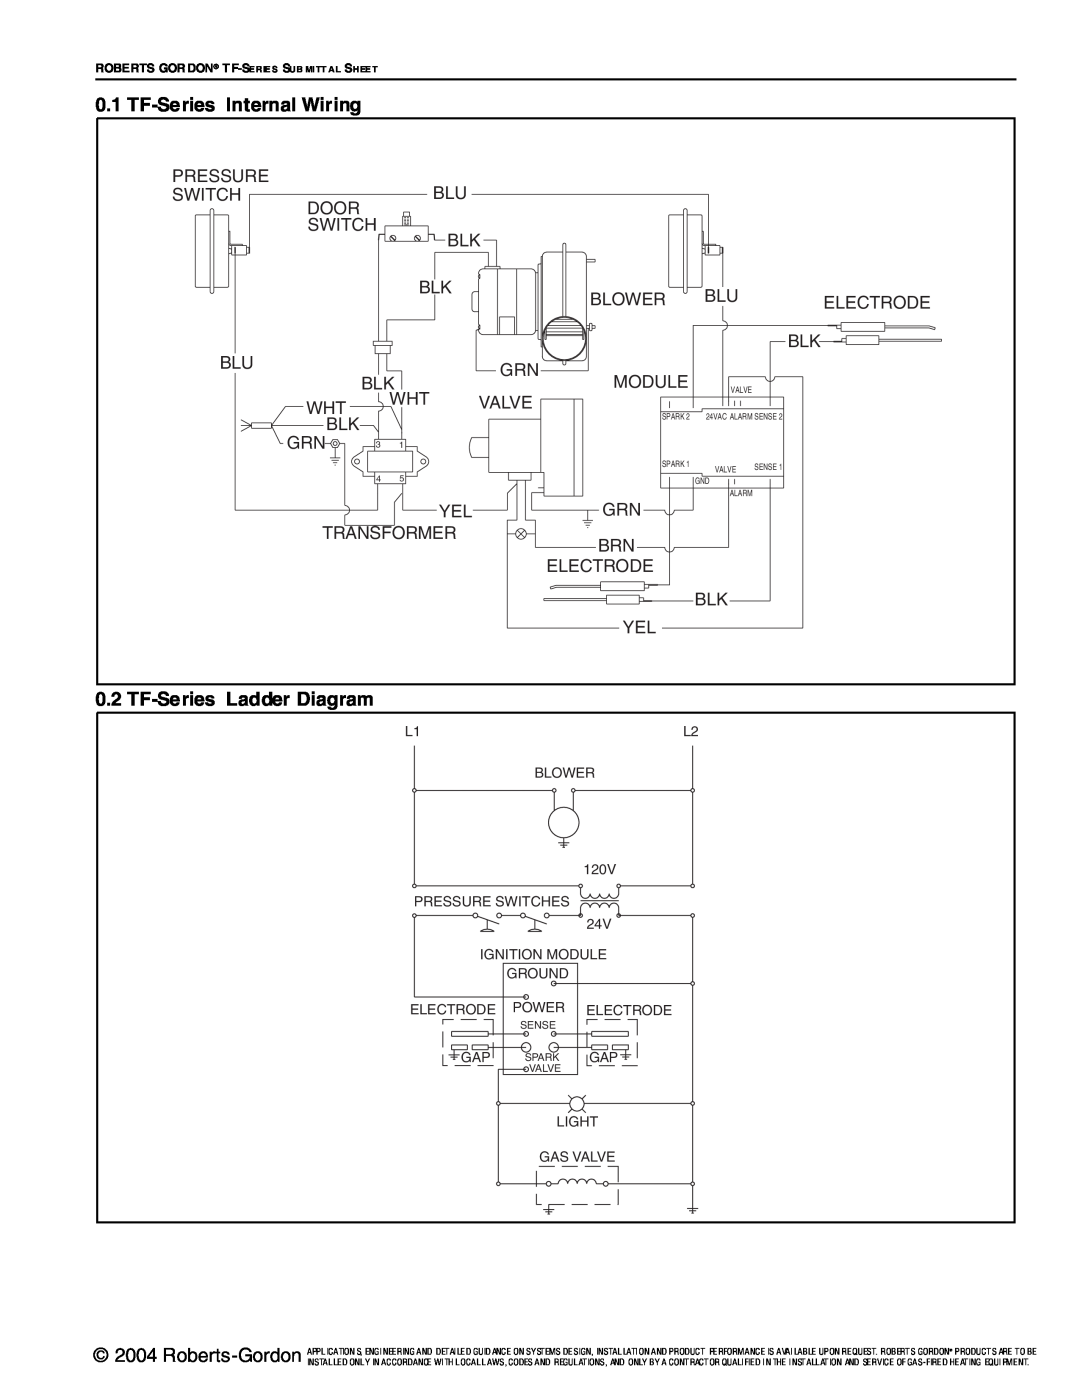 Roberts Gorden service manual TF-SeriesInternal Wiring, TF-SeriesLadder Diagram 